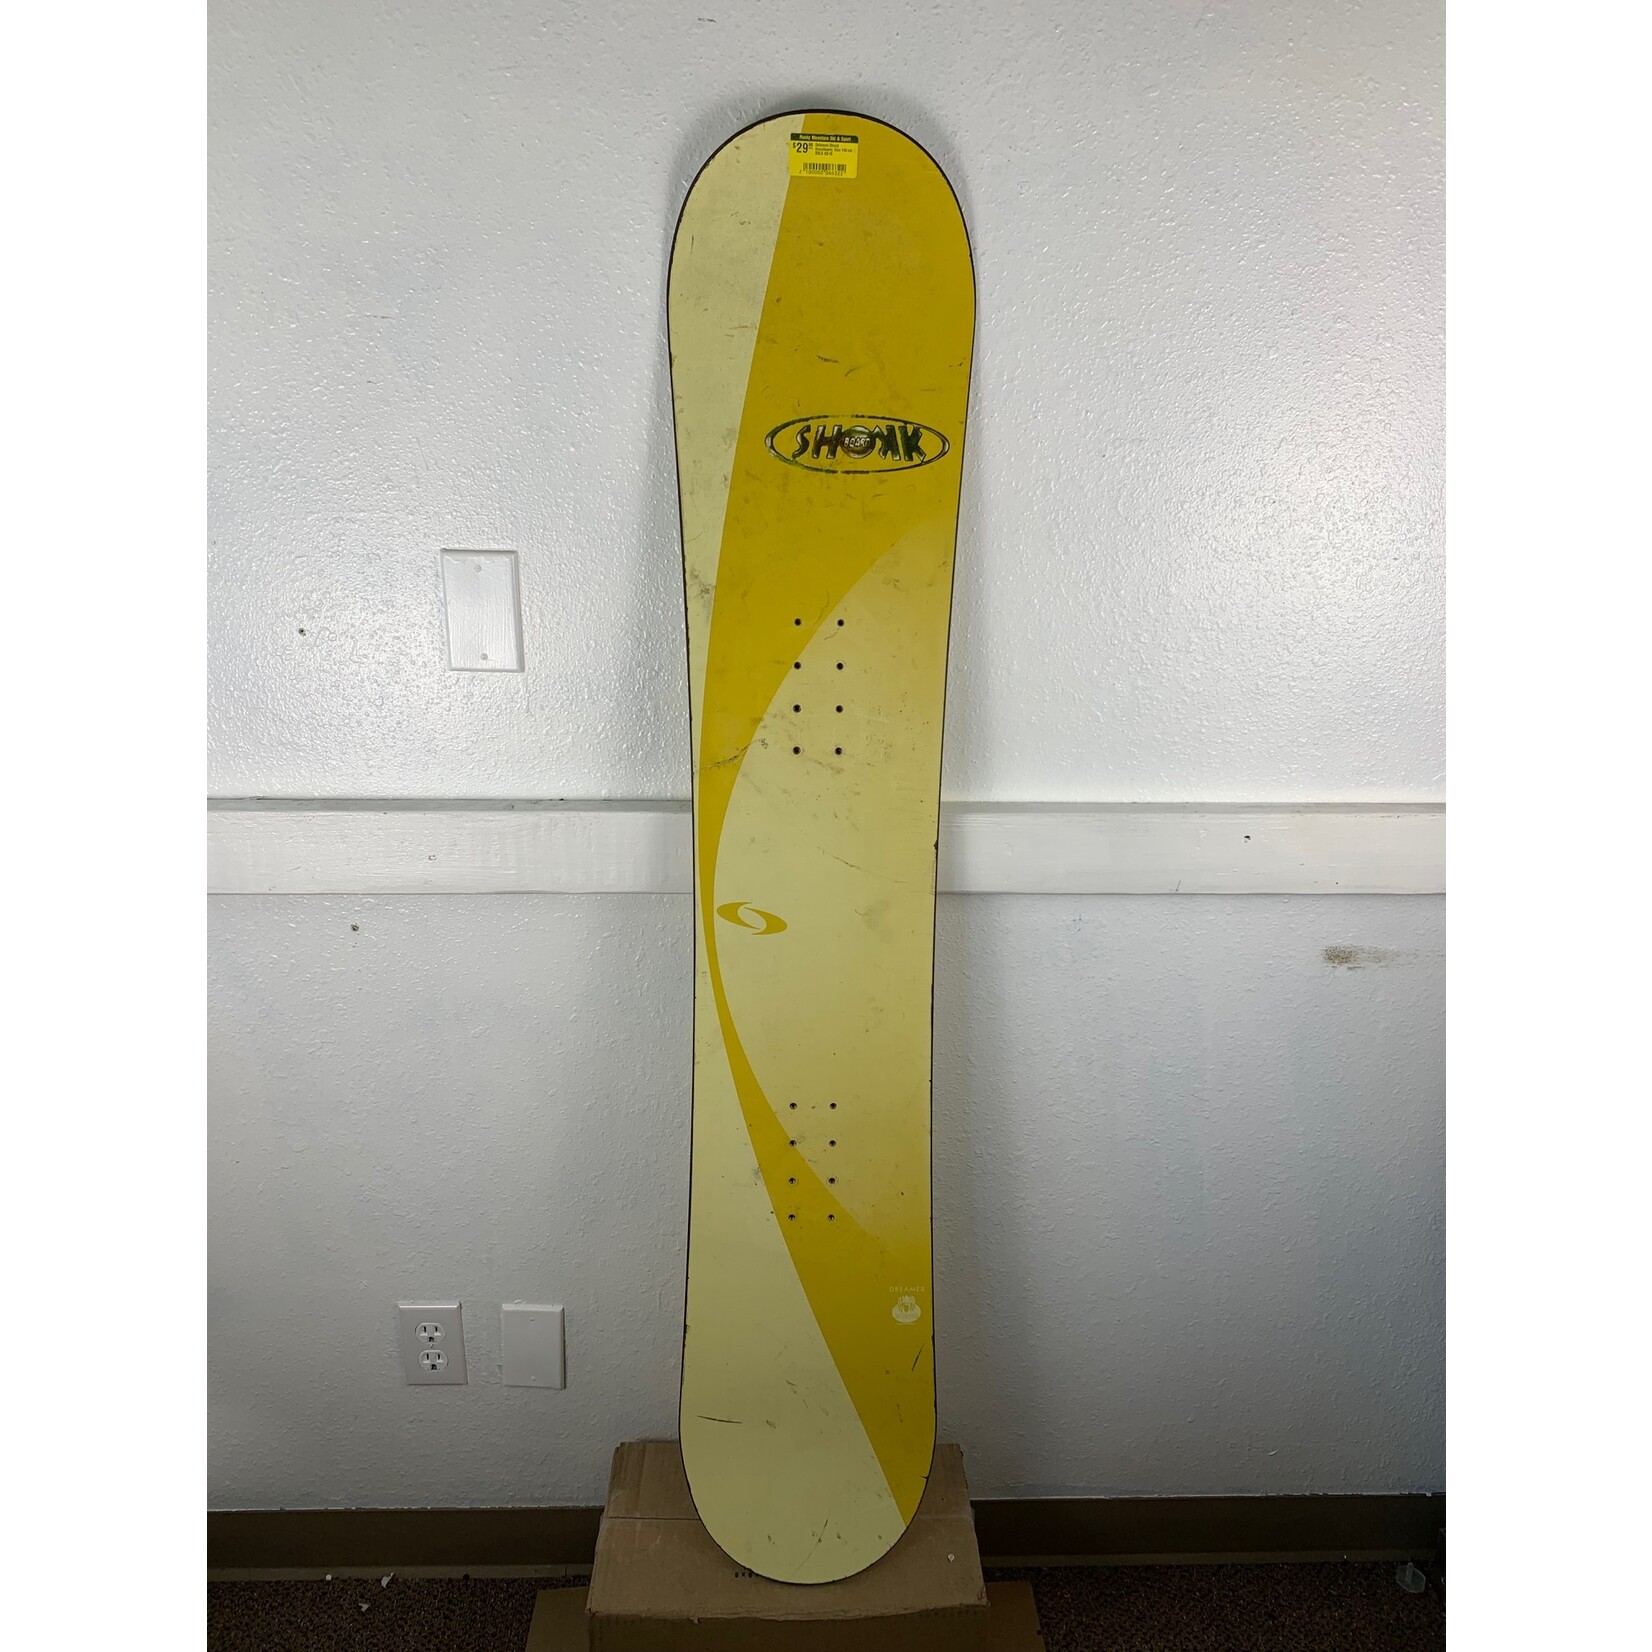 Salomon Salomon Shonk Snowboard, Size 146 cm | SOLD AS IS